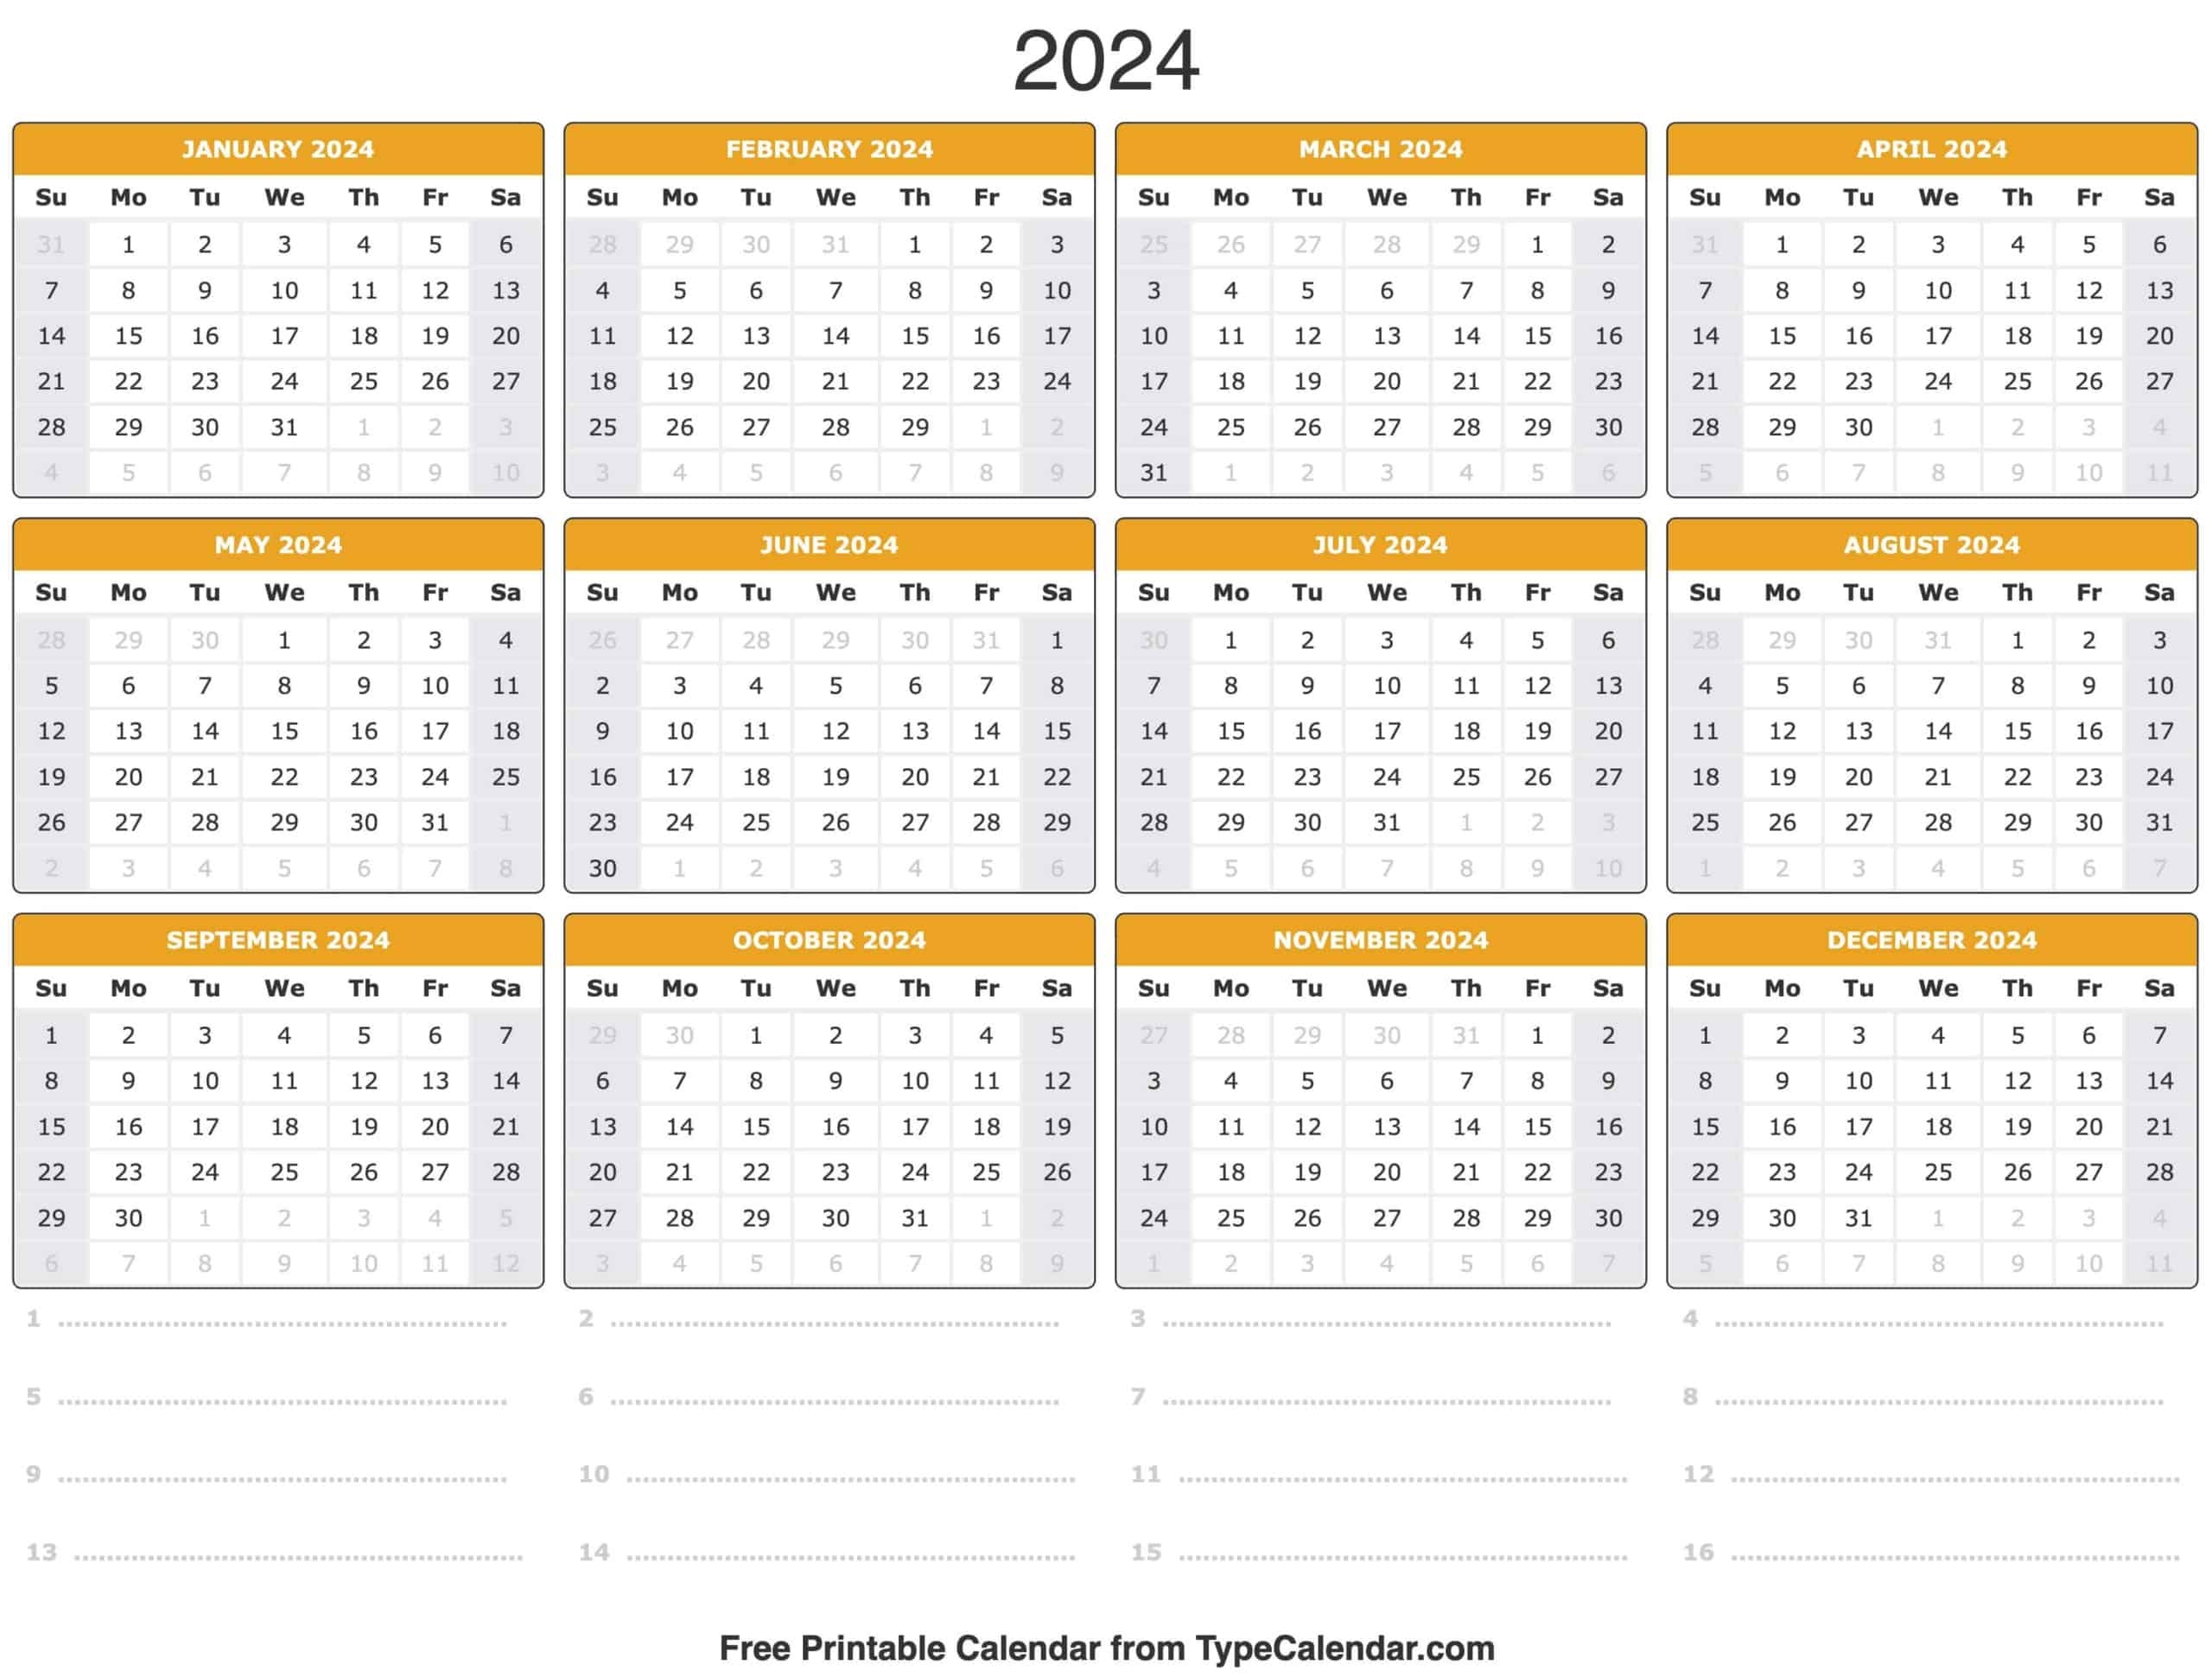 2024 Calendar: Free Printable Calendar With Holidays with regard to Free Printable Blank 2024 Calendar With Holidays